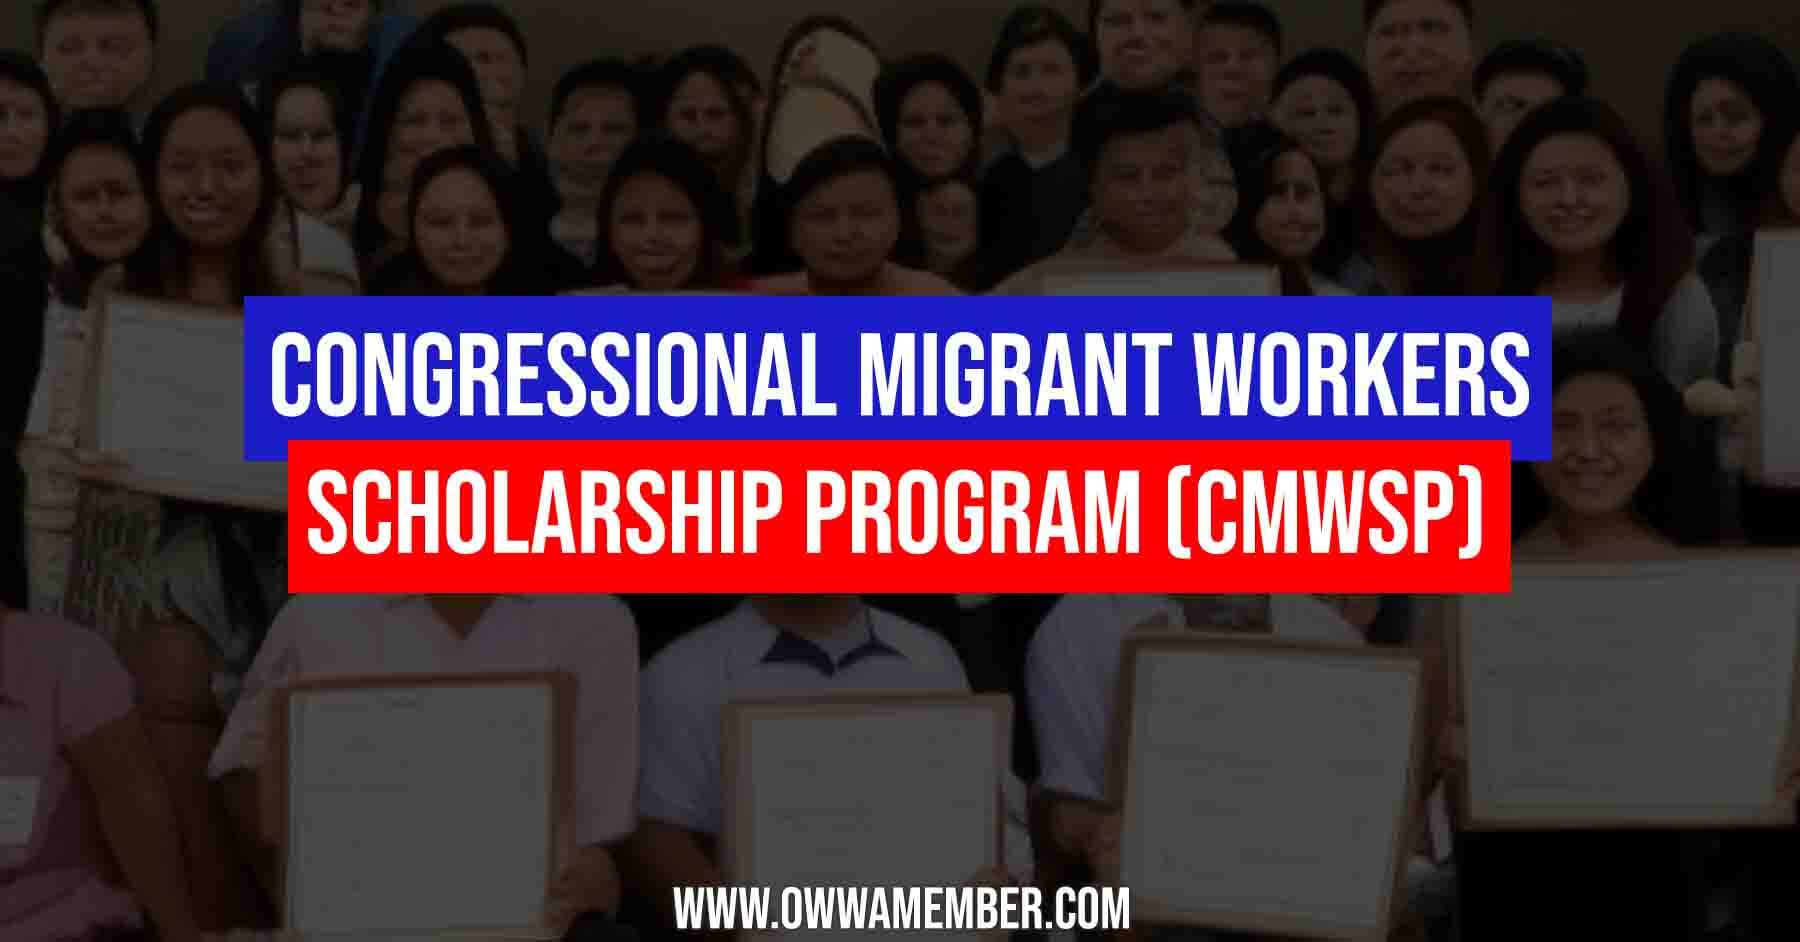 Congressional Migrant Workers Scholarship Program cmwsp